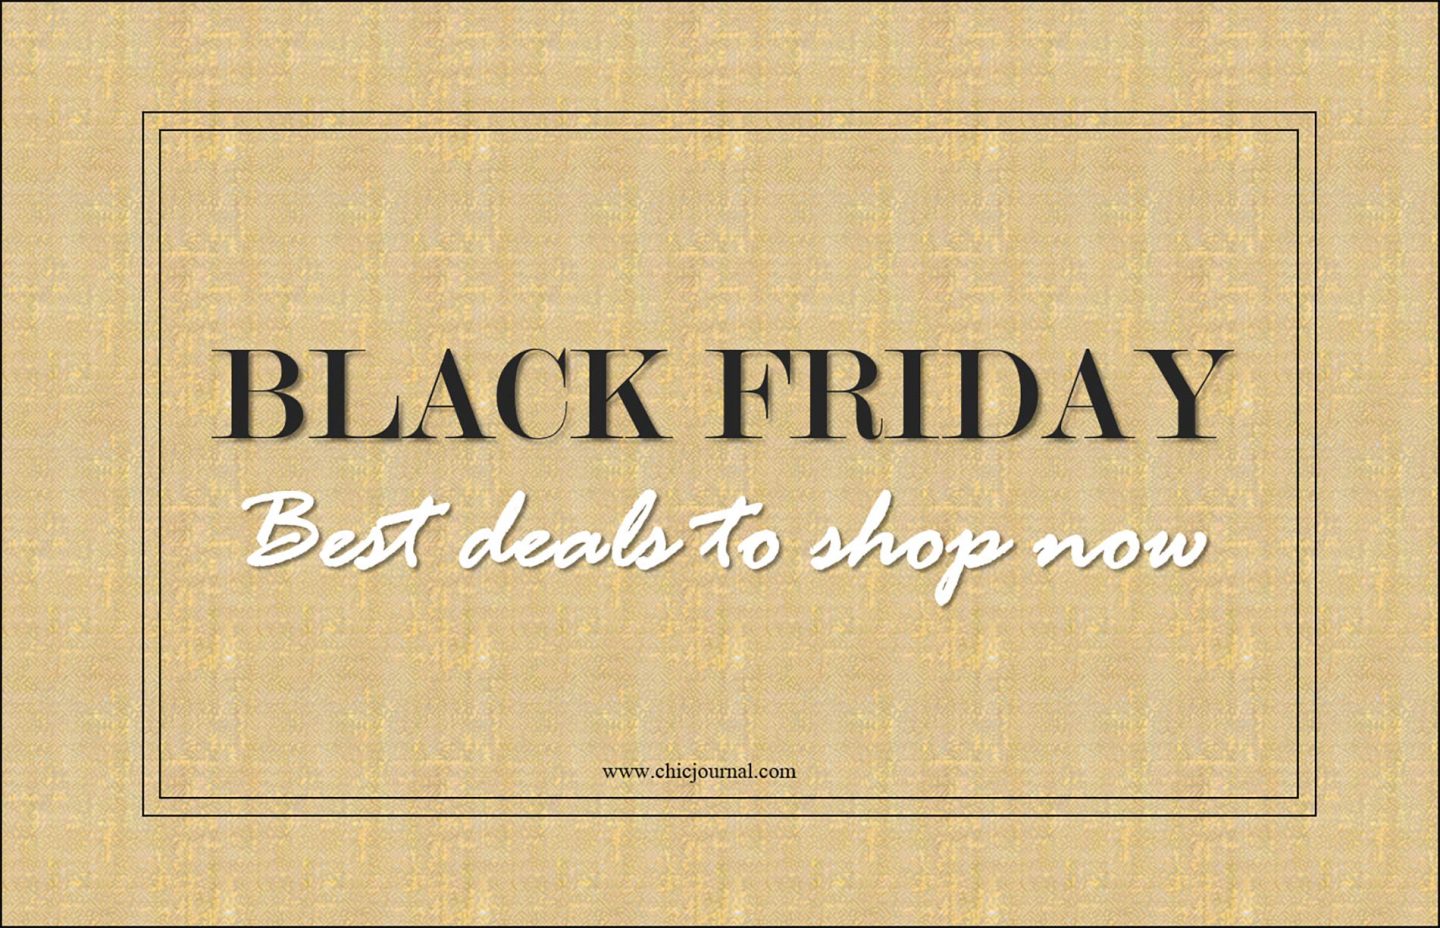 Black Friday deals. Best deals to shop now